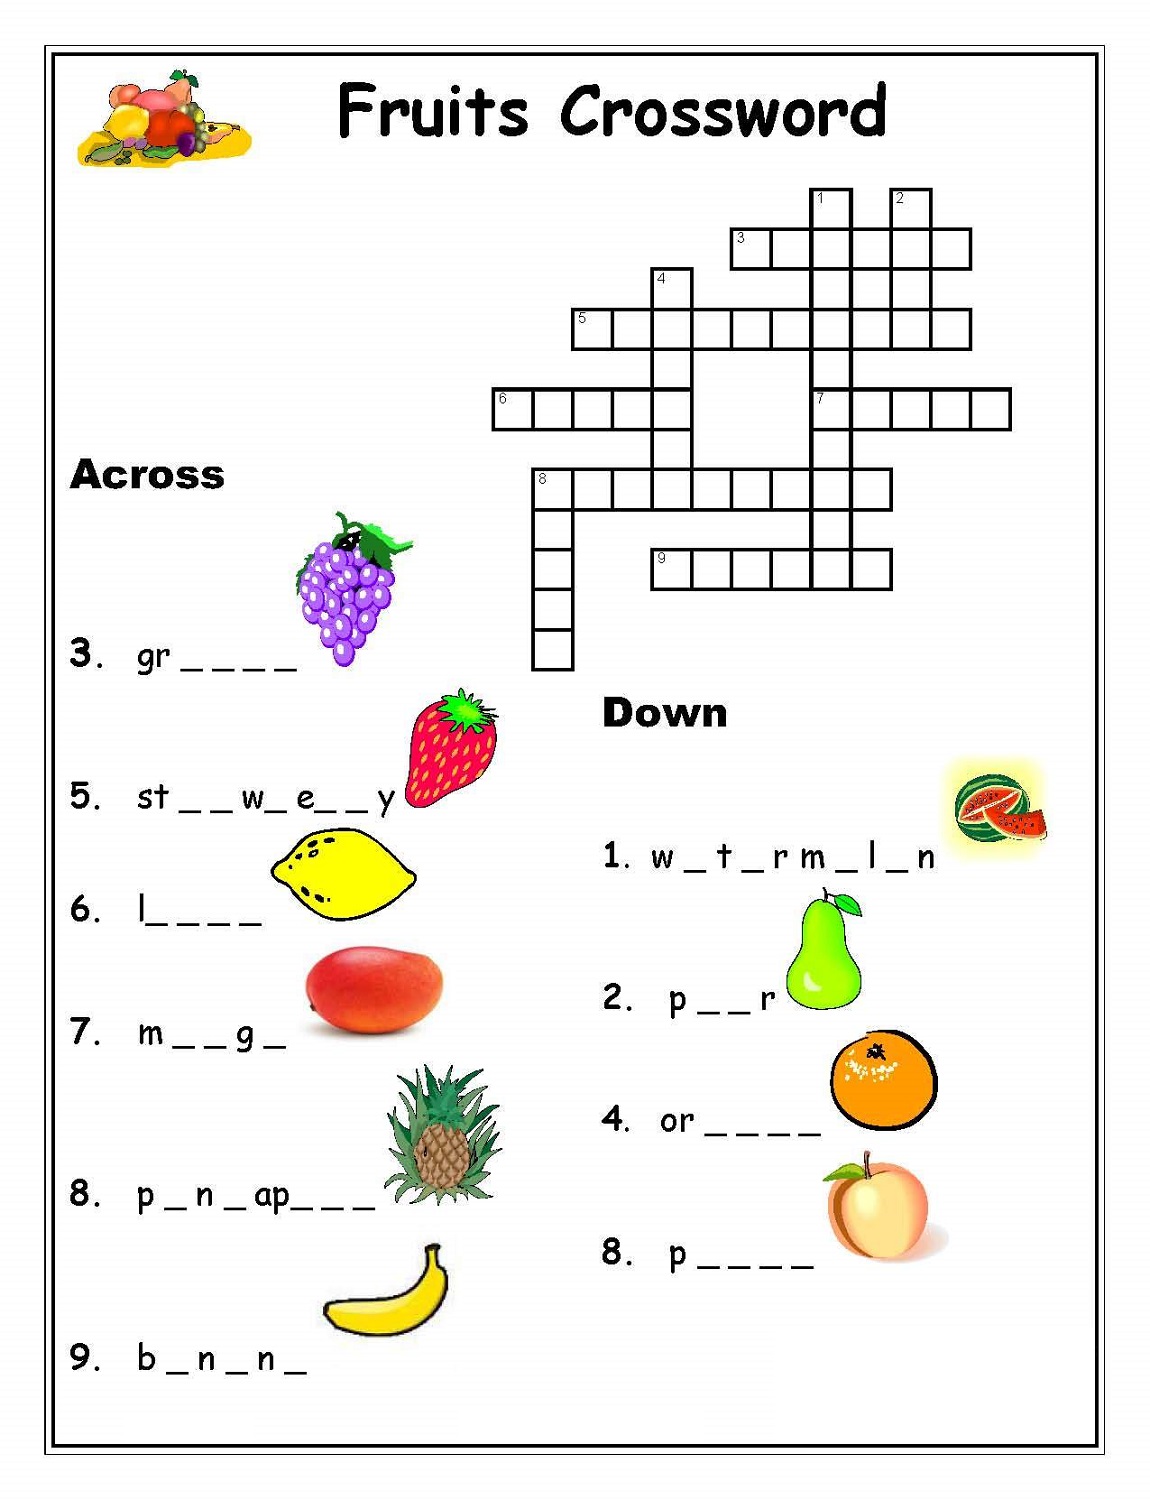 kids-fun-and-go-cross-word-activities-for-kids-back-to-school-crossword-puzzles-tree-valley